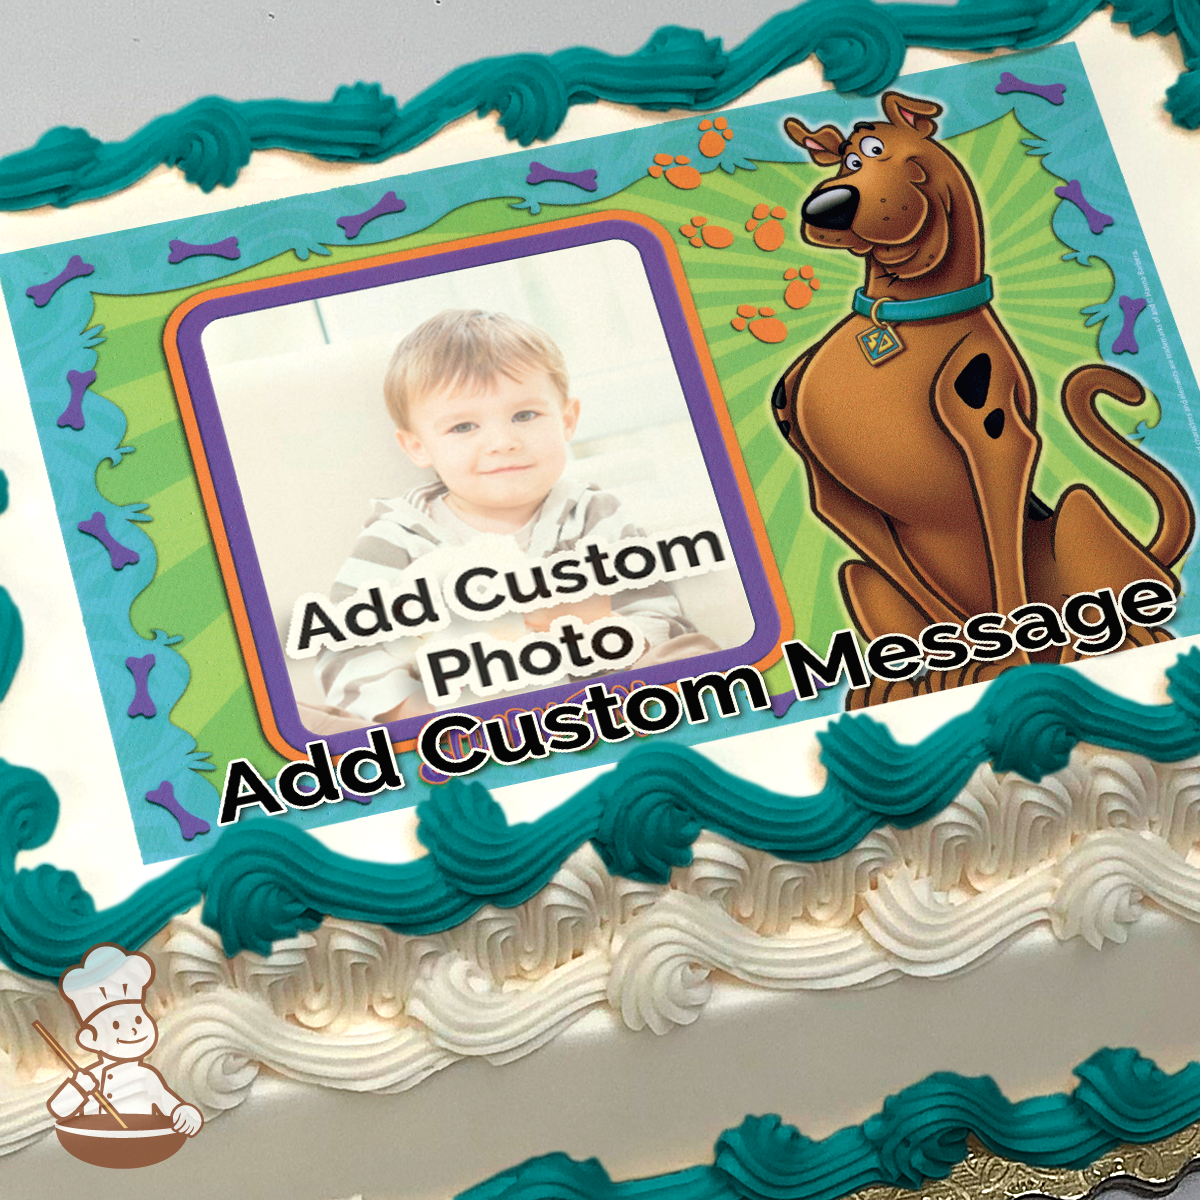 Scooby Doo And You Custom Photo Cake